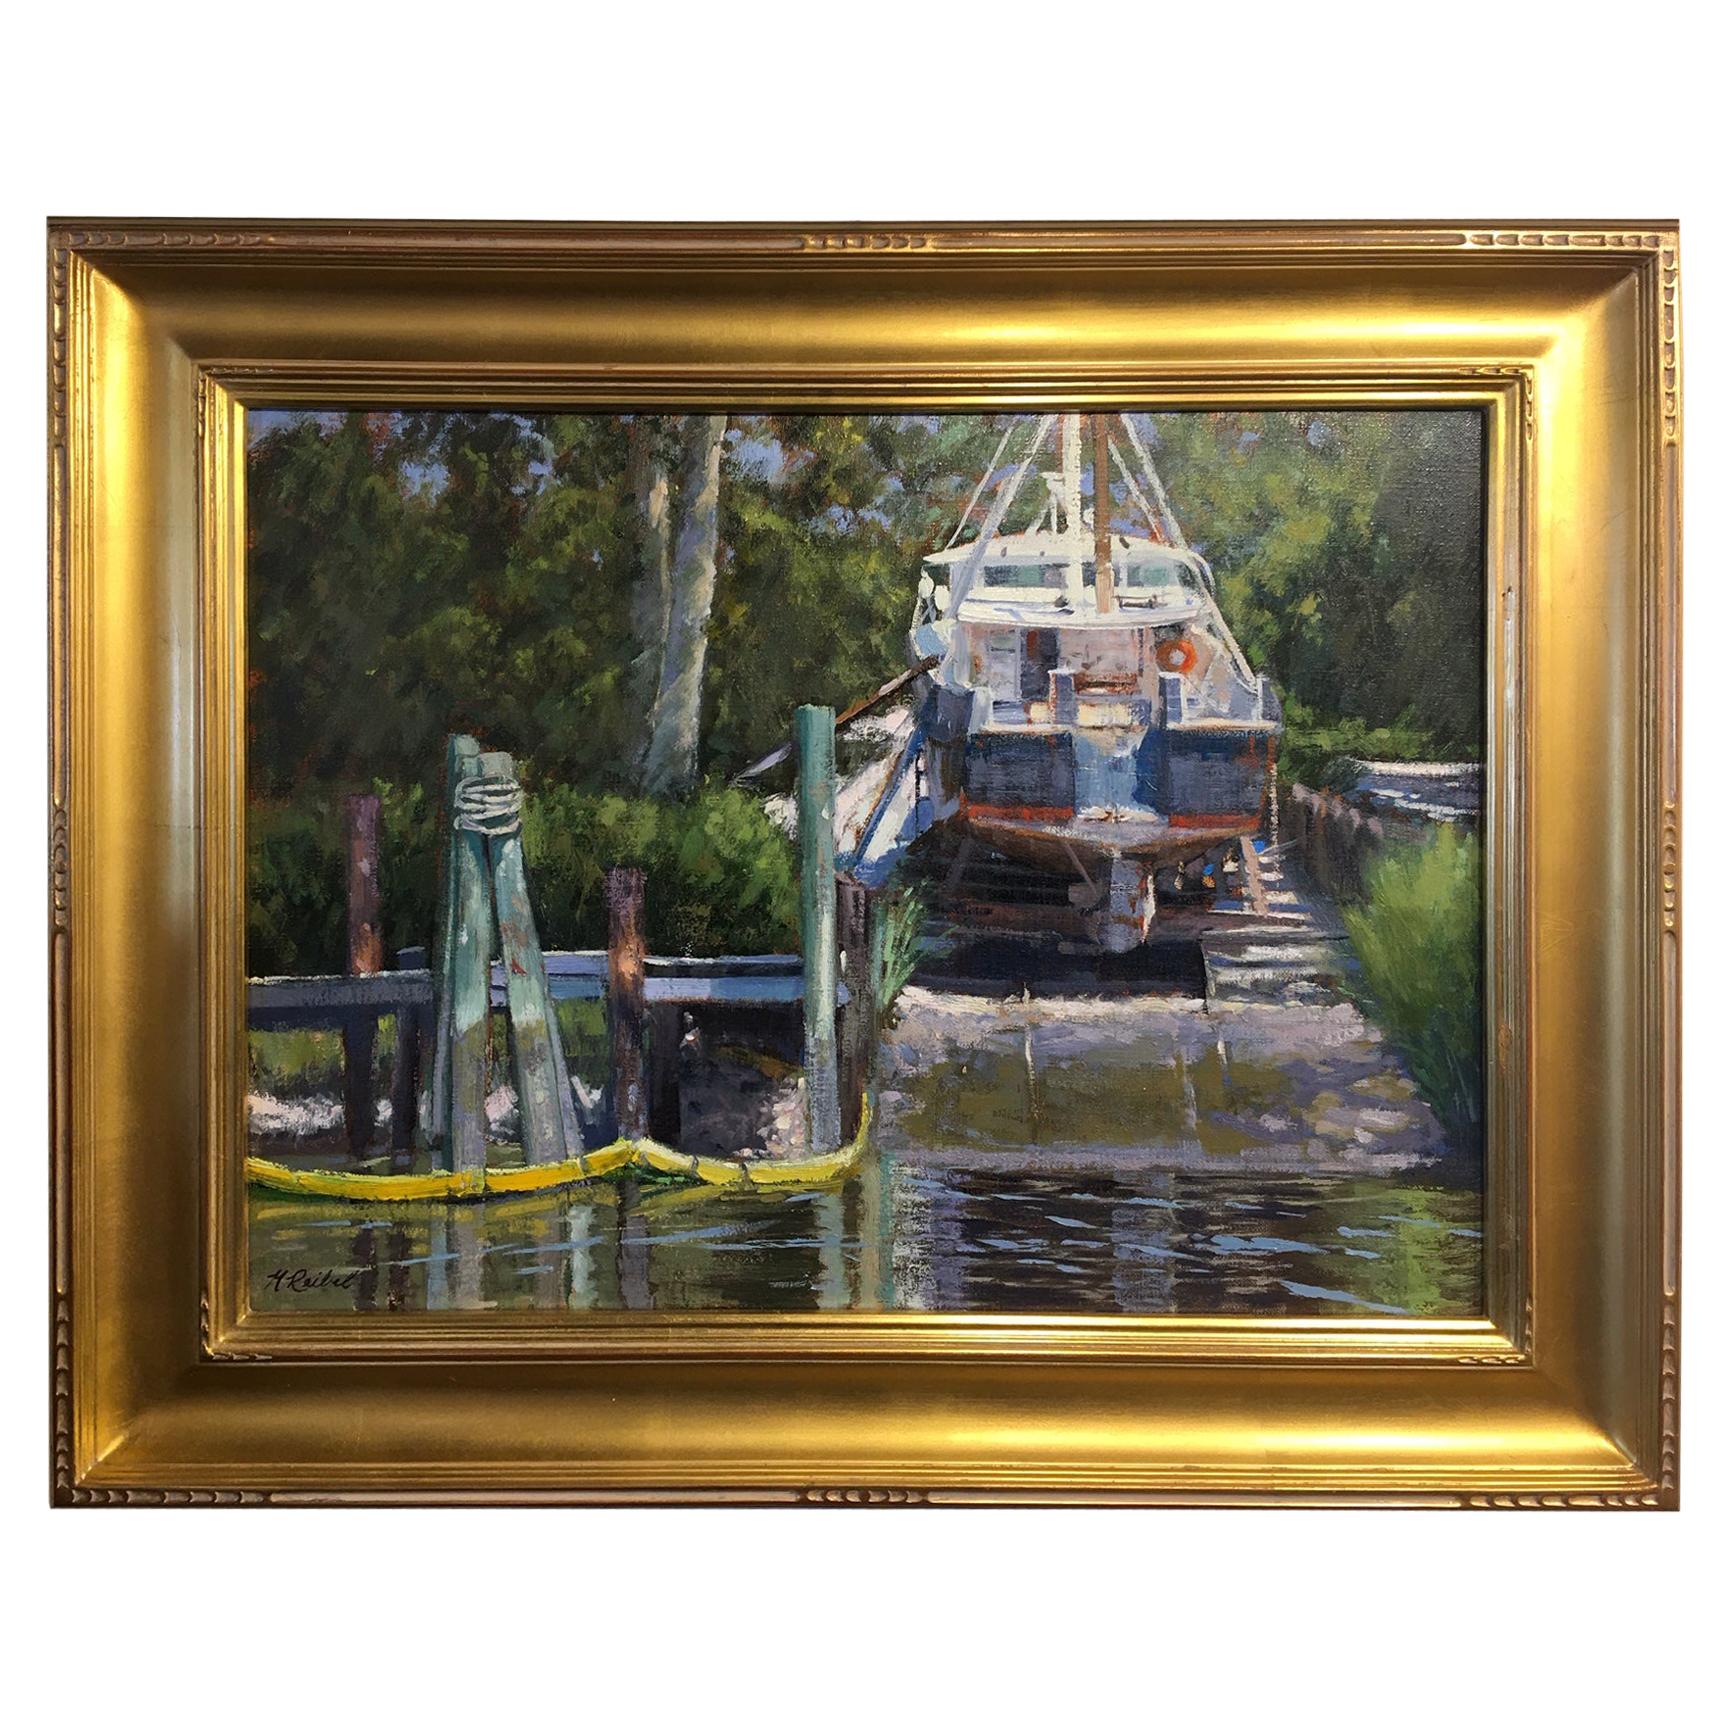 Oil on Canvas Painting "Needs Some Lovin" Shrimp Boat, Michael Reibel